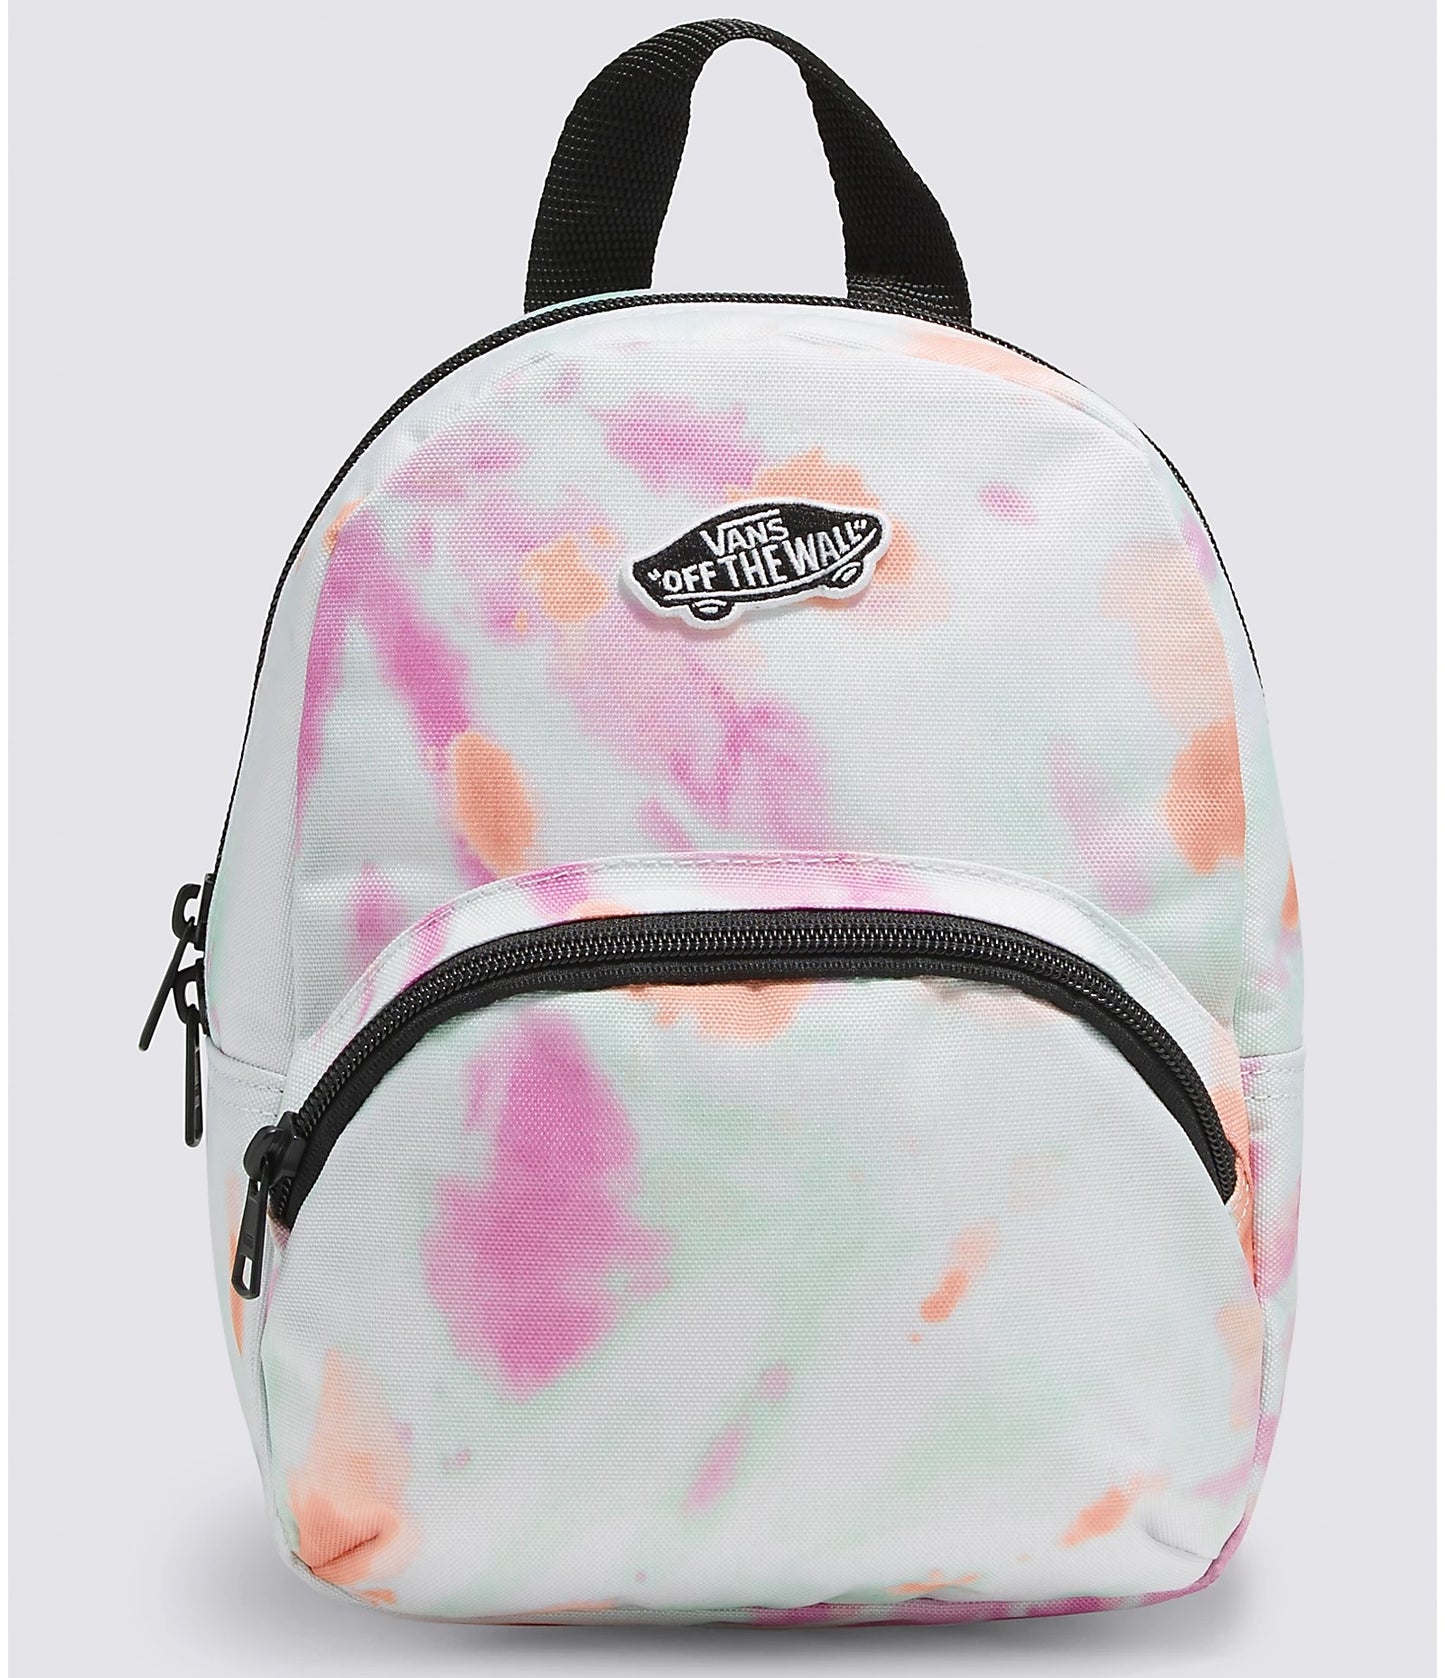 VANS Got This Mini Backpack - Multi Color